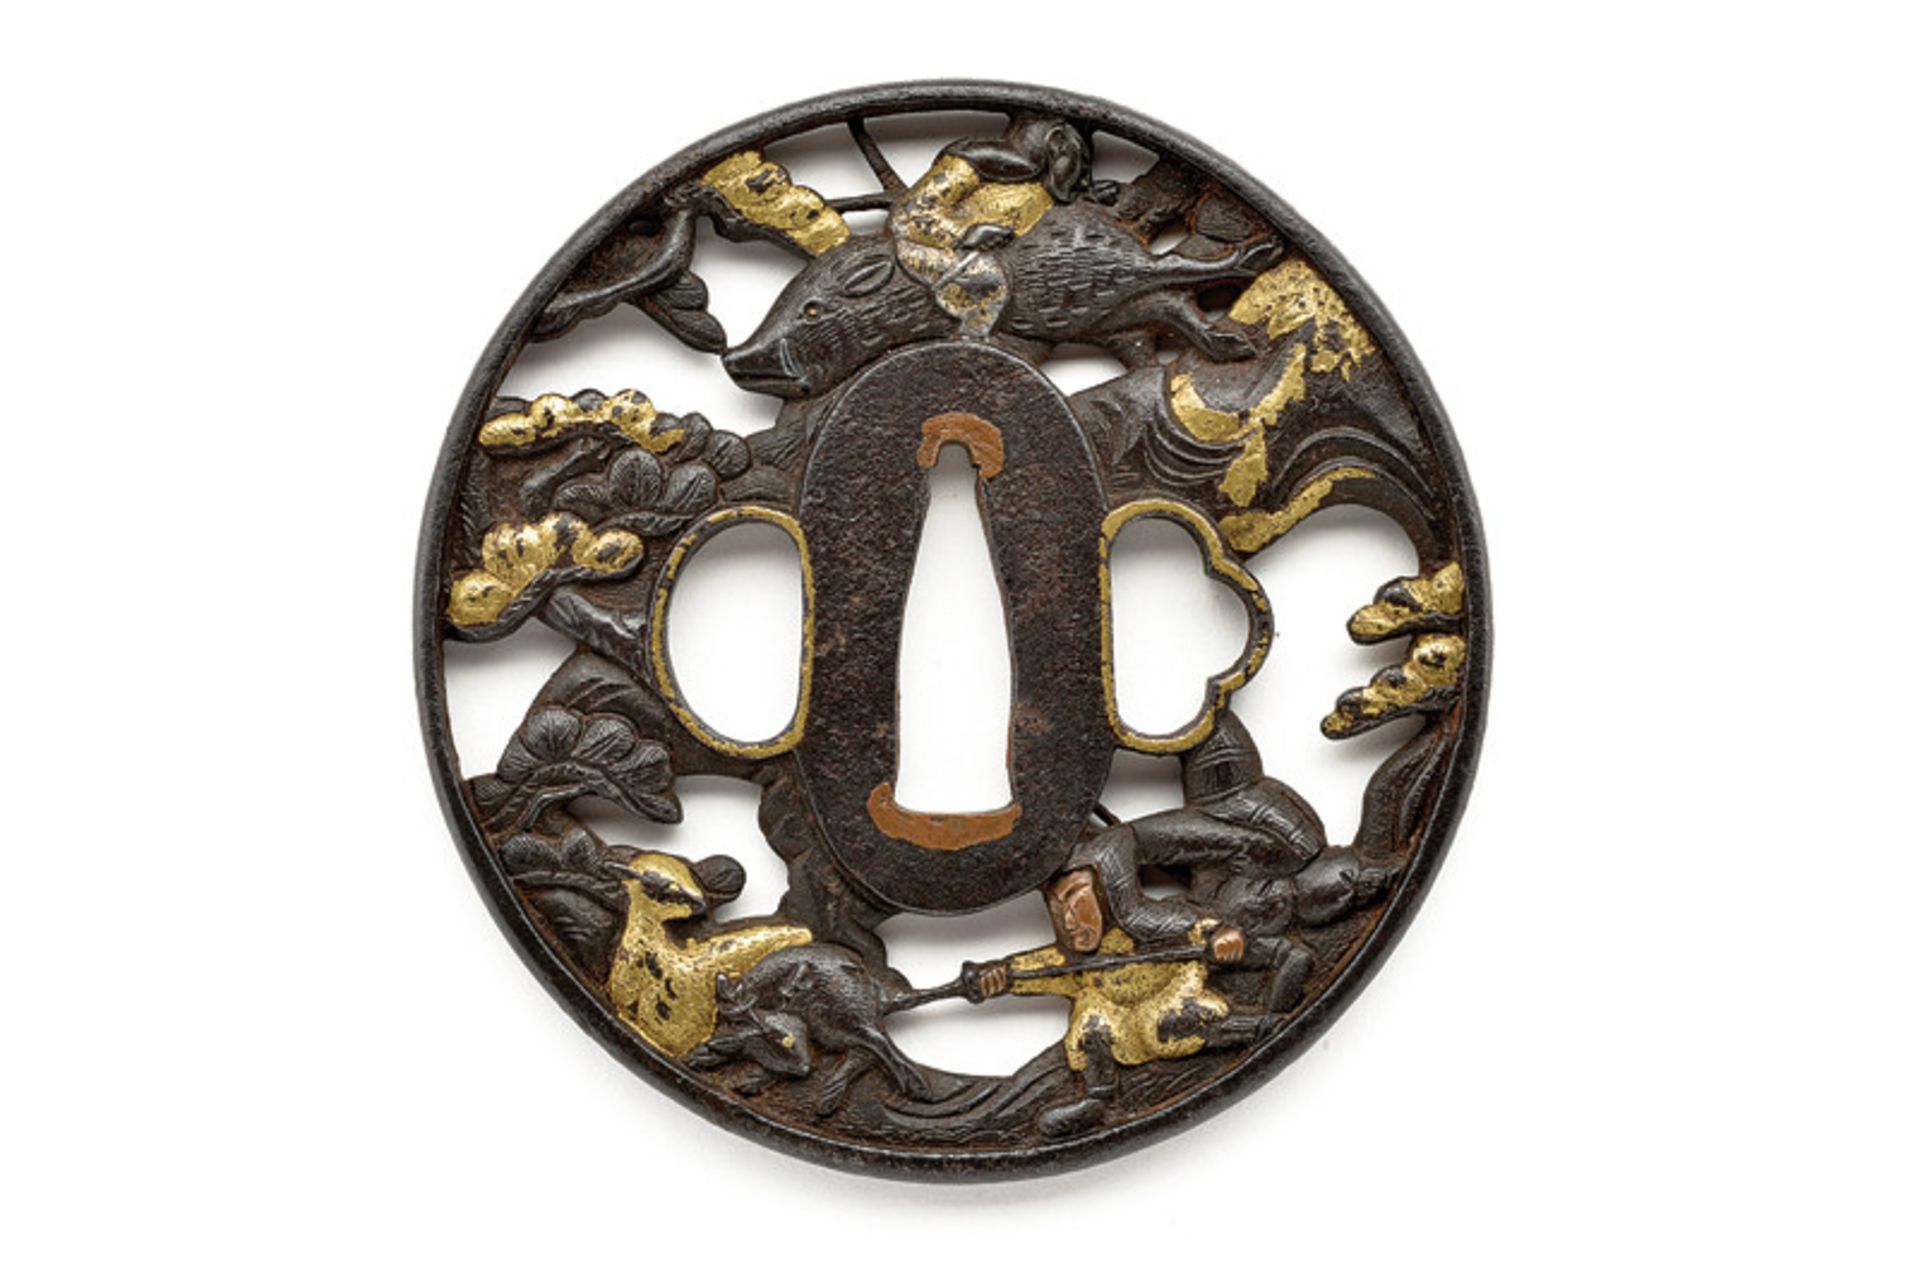 A hikone tsuba dating: Edo Period (1615-1868) provenance: Japan Iron tsuba, pierced and partially